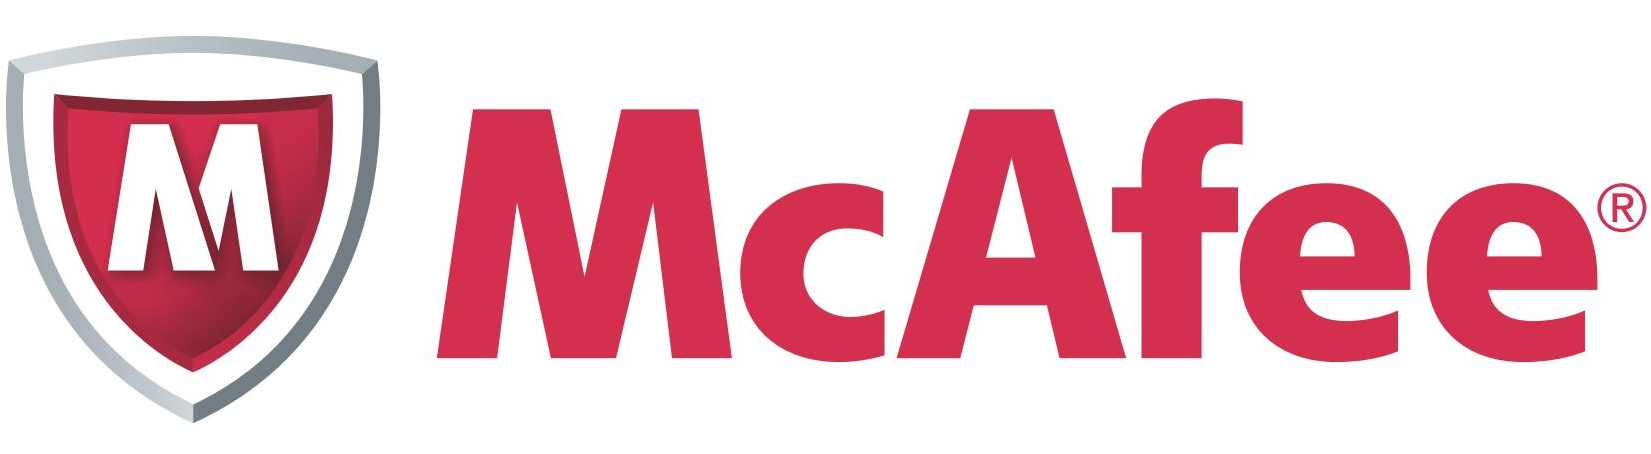 McAfee AntiVirus Plus - Subscription License - 10 Device - 1 Year